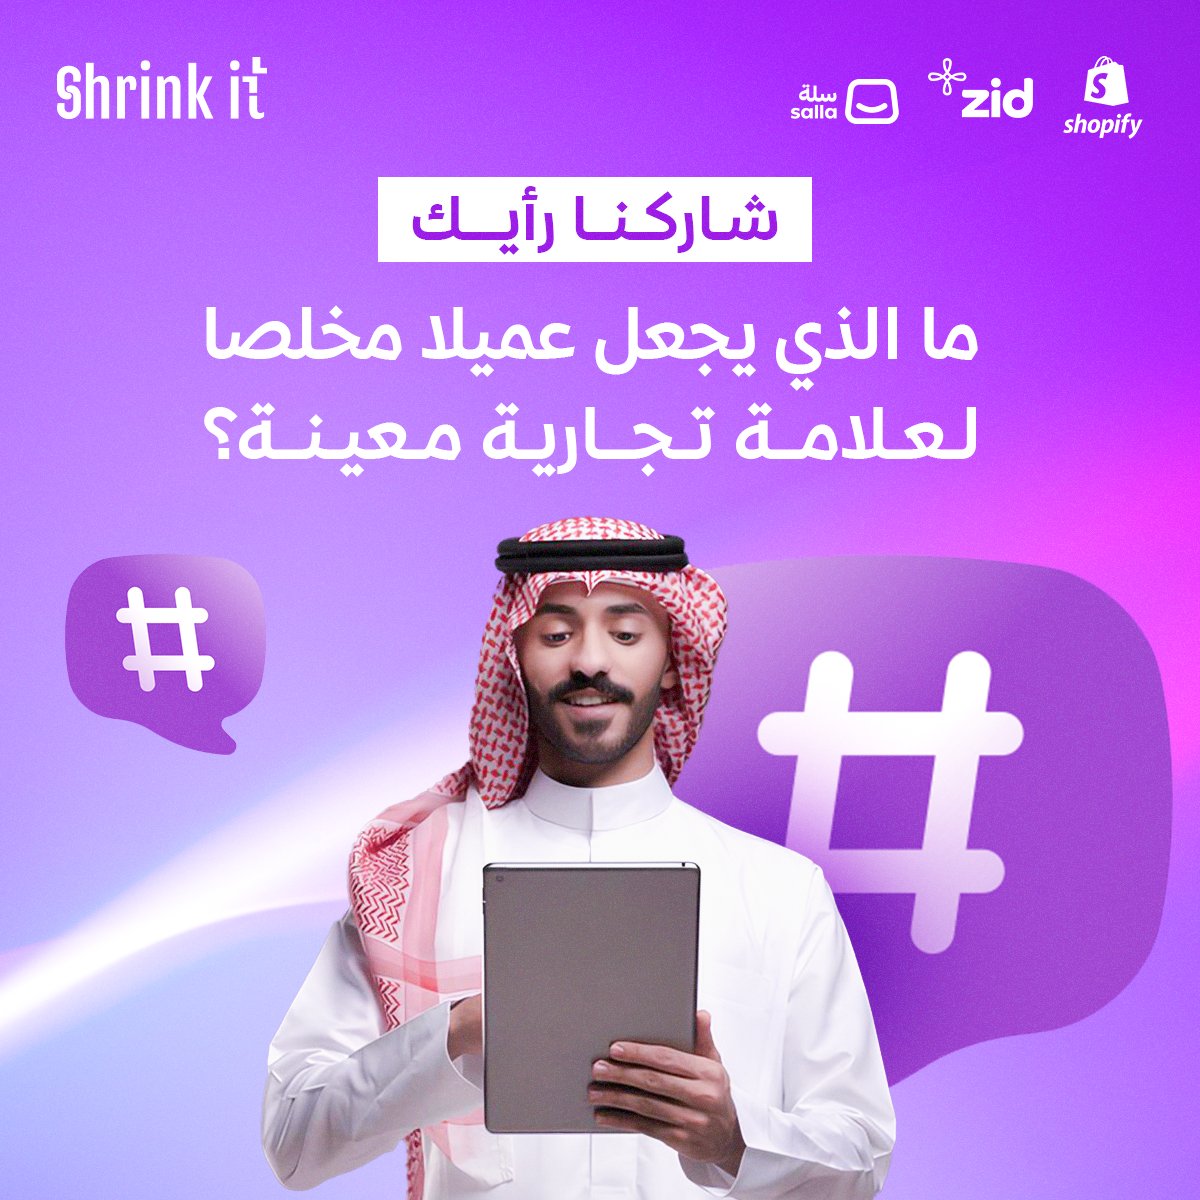 #ecommerce #DigitalMarketing #ShrinkIt #ecommercebusiness #Zid #Salla #Shopify #متاجر_إلكترونية #Saudiarabia #أدوات_التسويق #snapchat #سلة